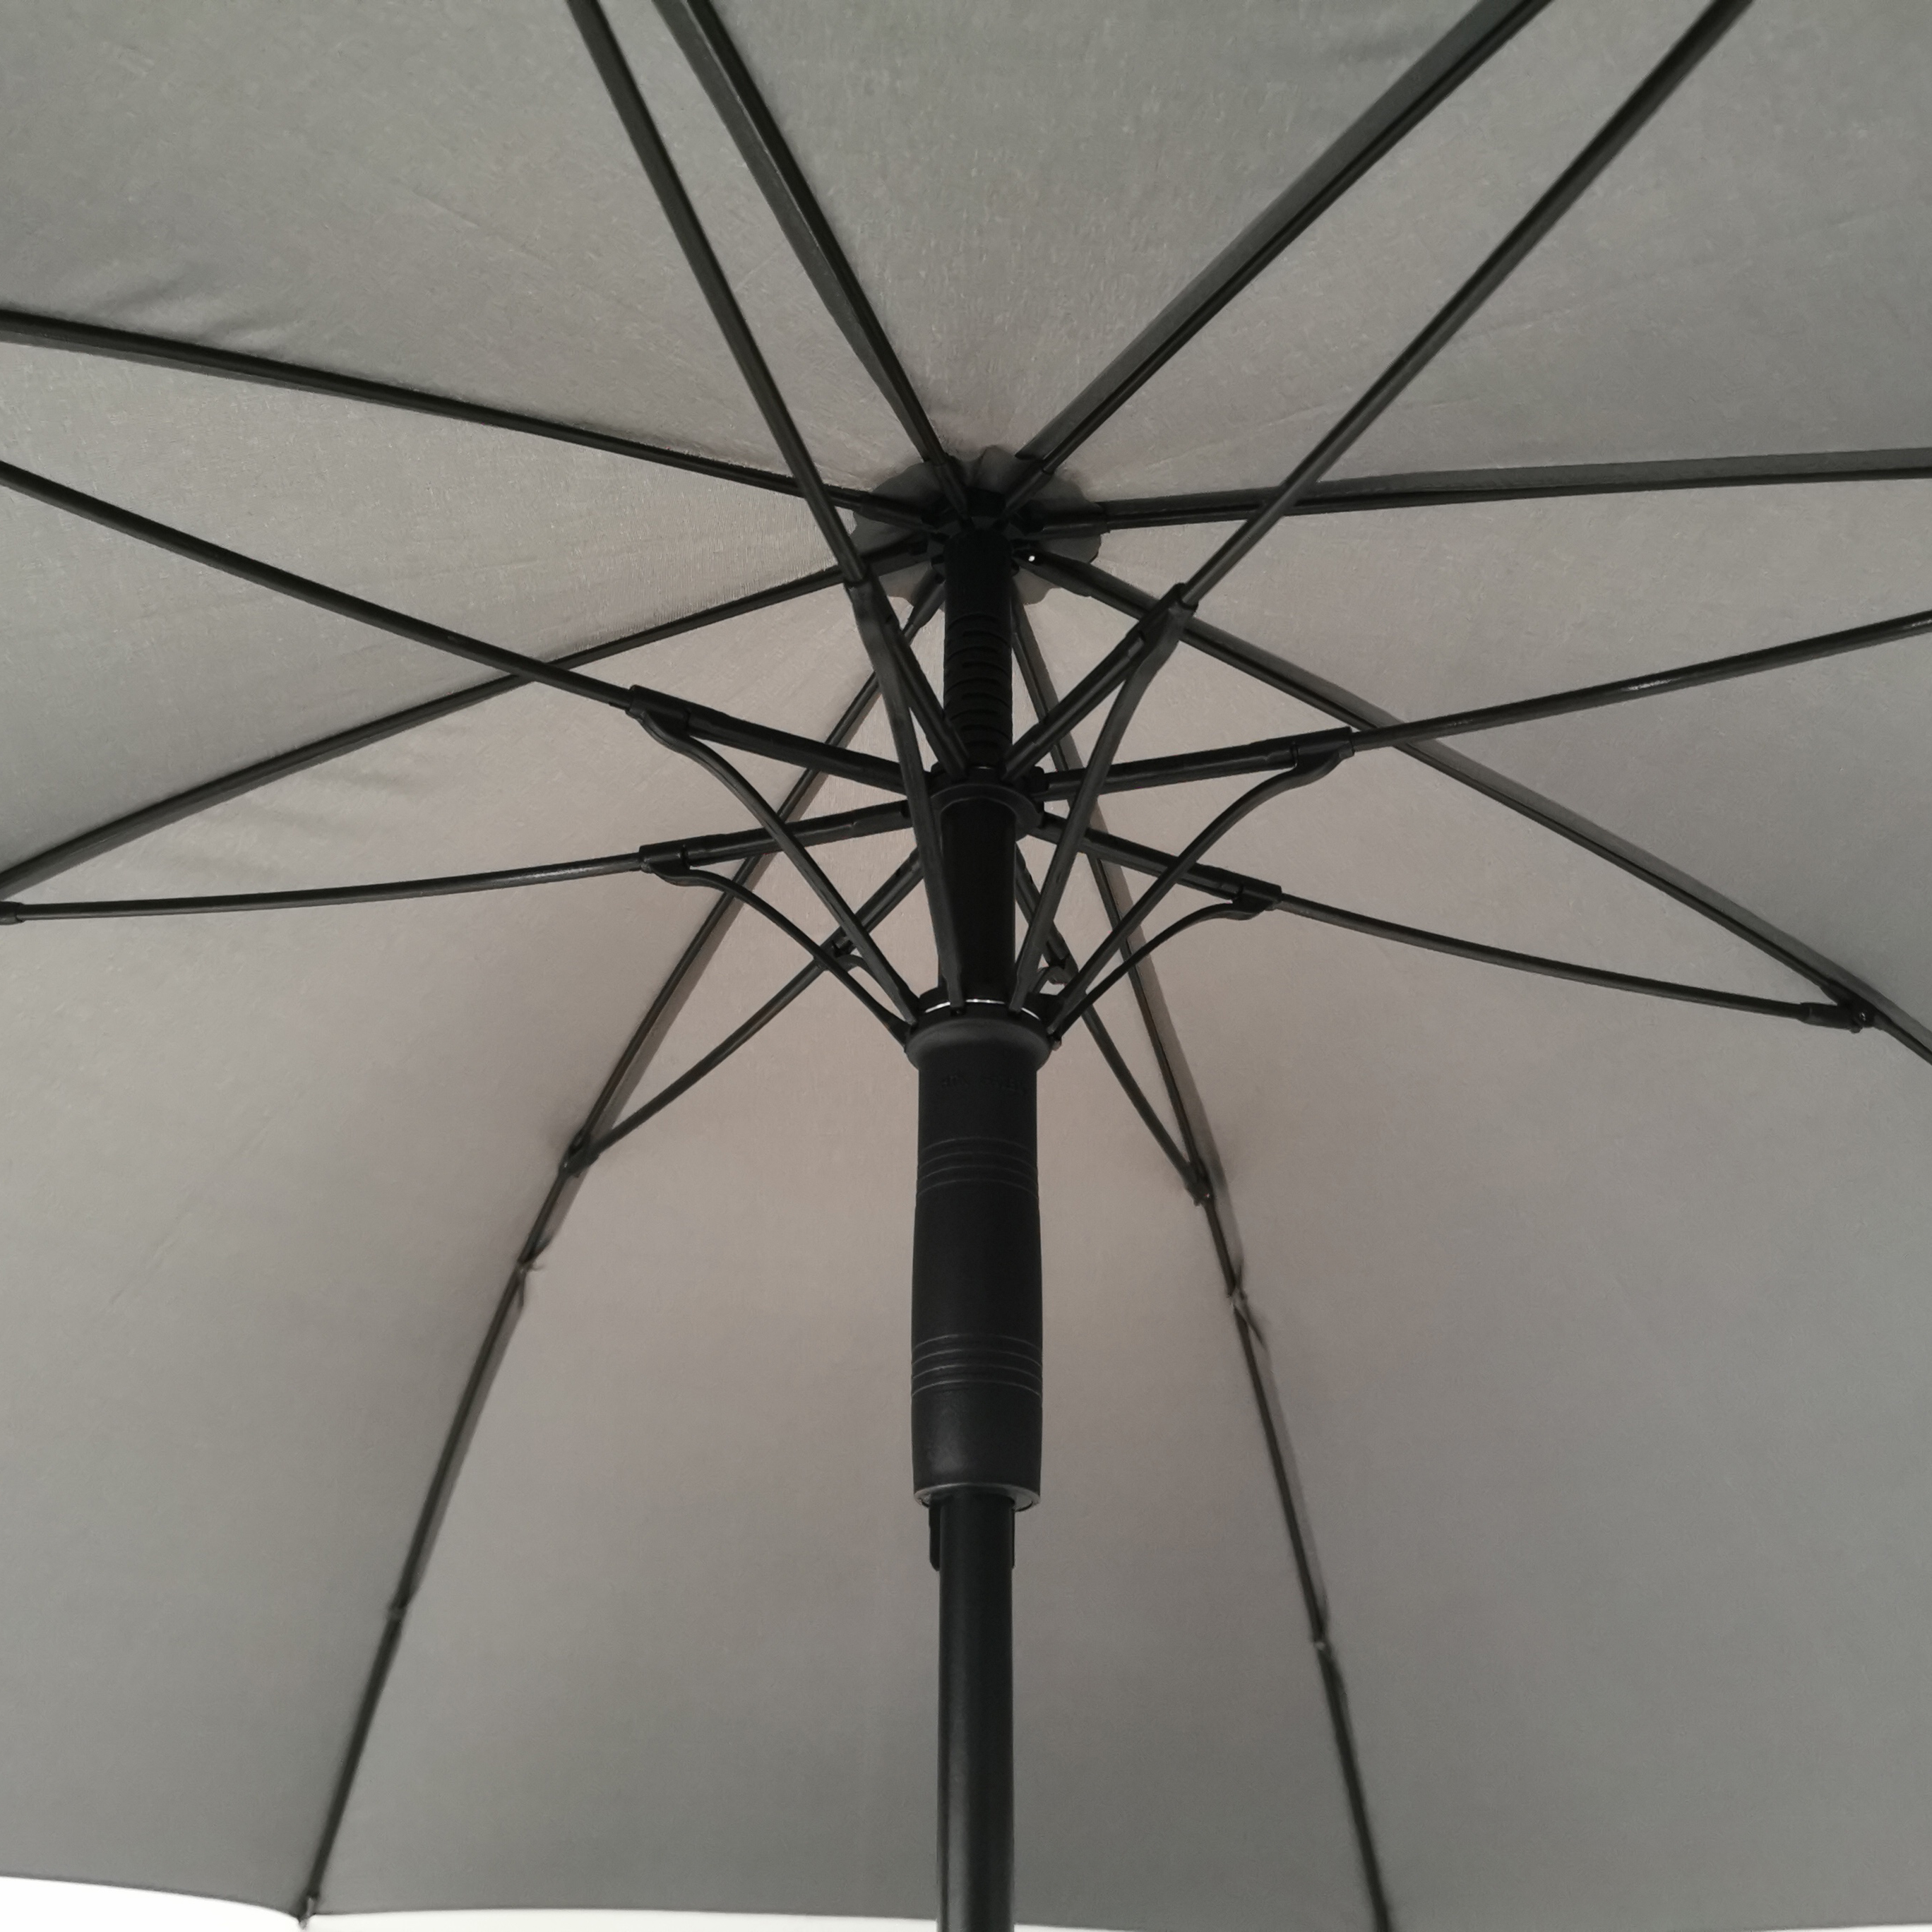 https://www.hodaumbrella.com/premium-qualitty-arc-54-inch-golf-umbrella-product/